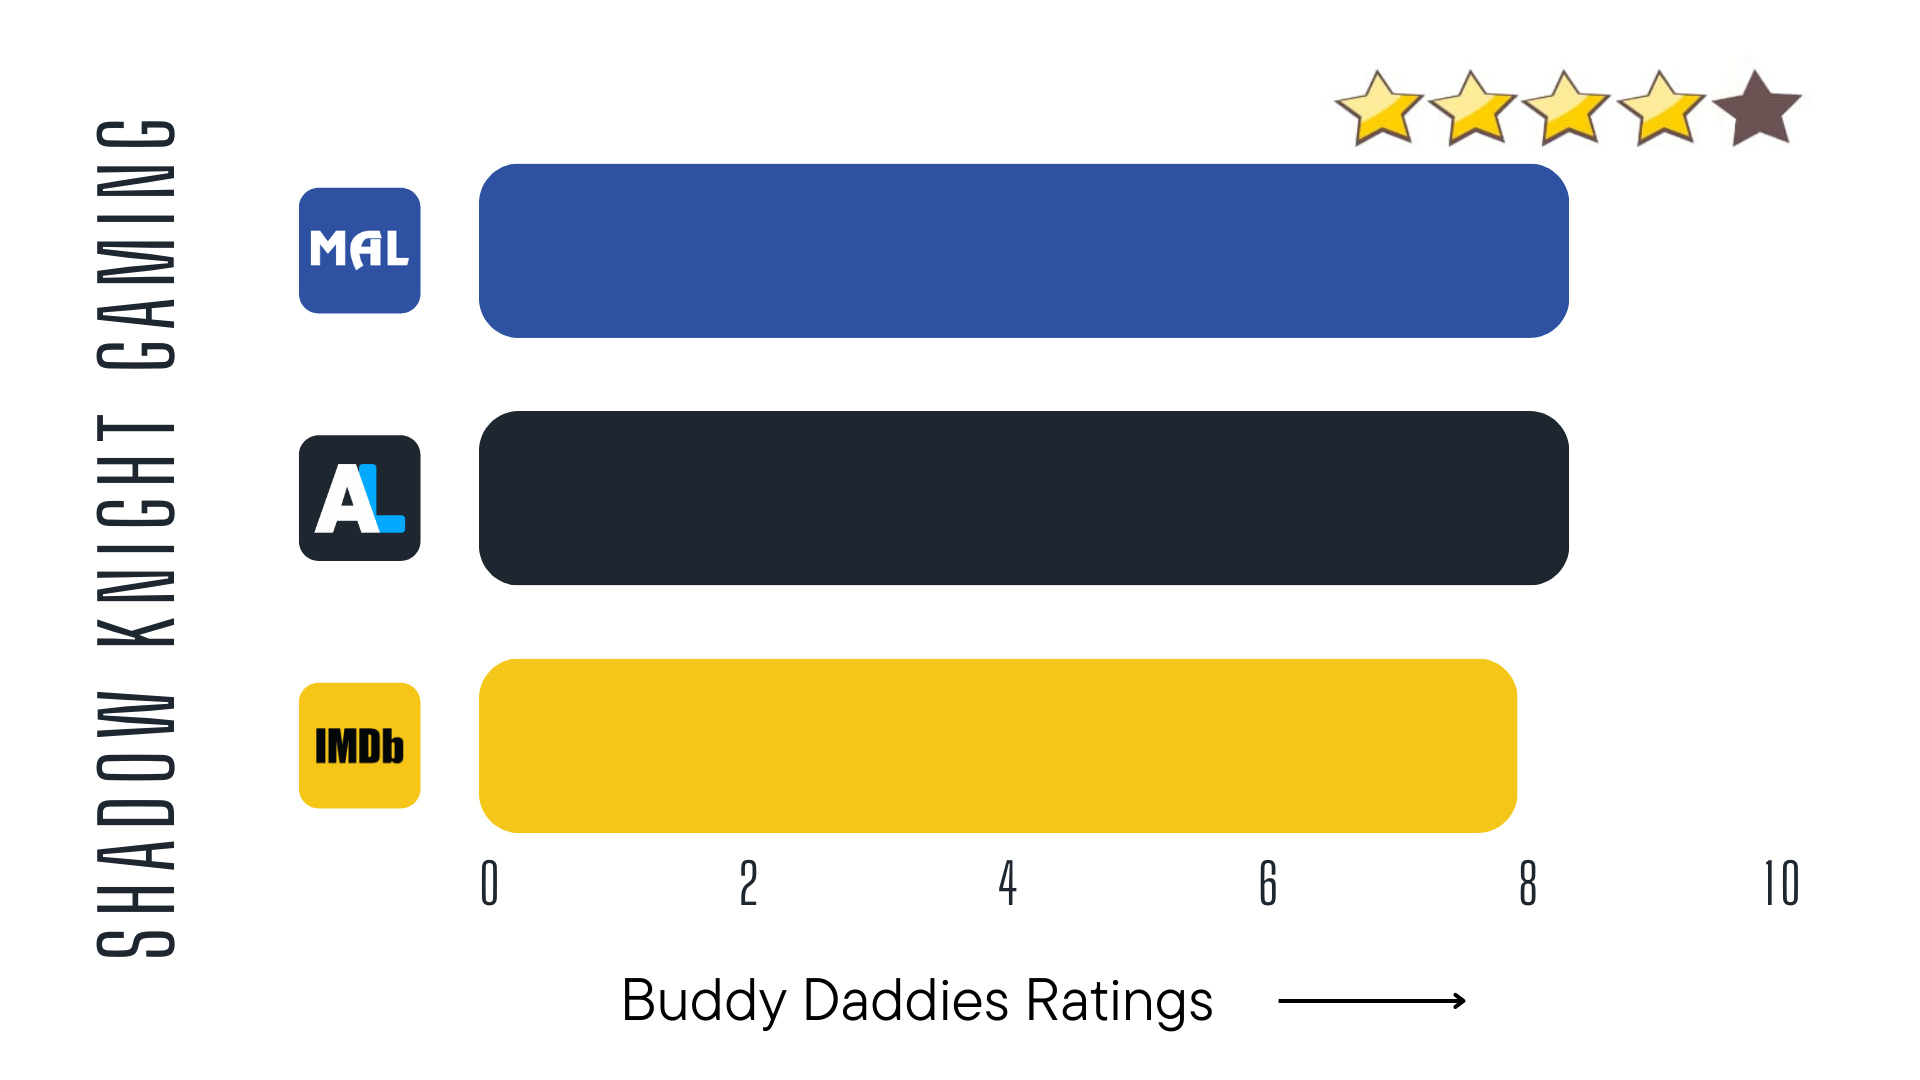 Buddy Daddies Season 1 Ratings